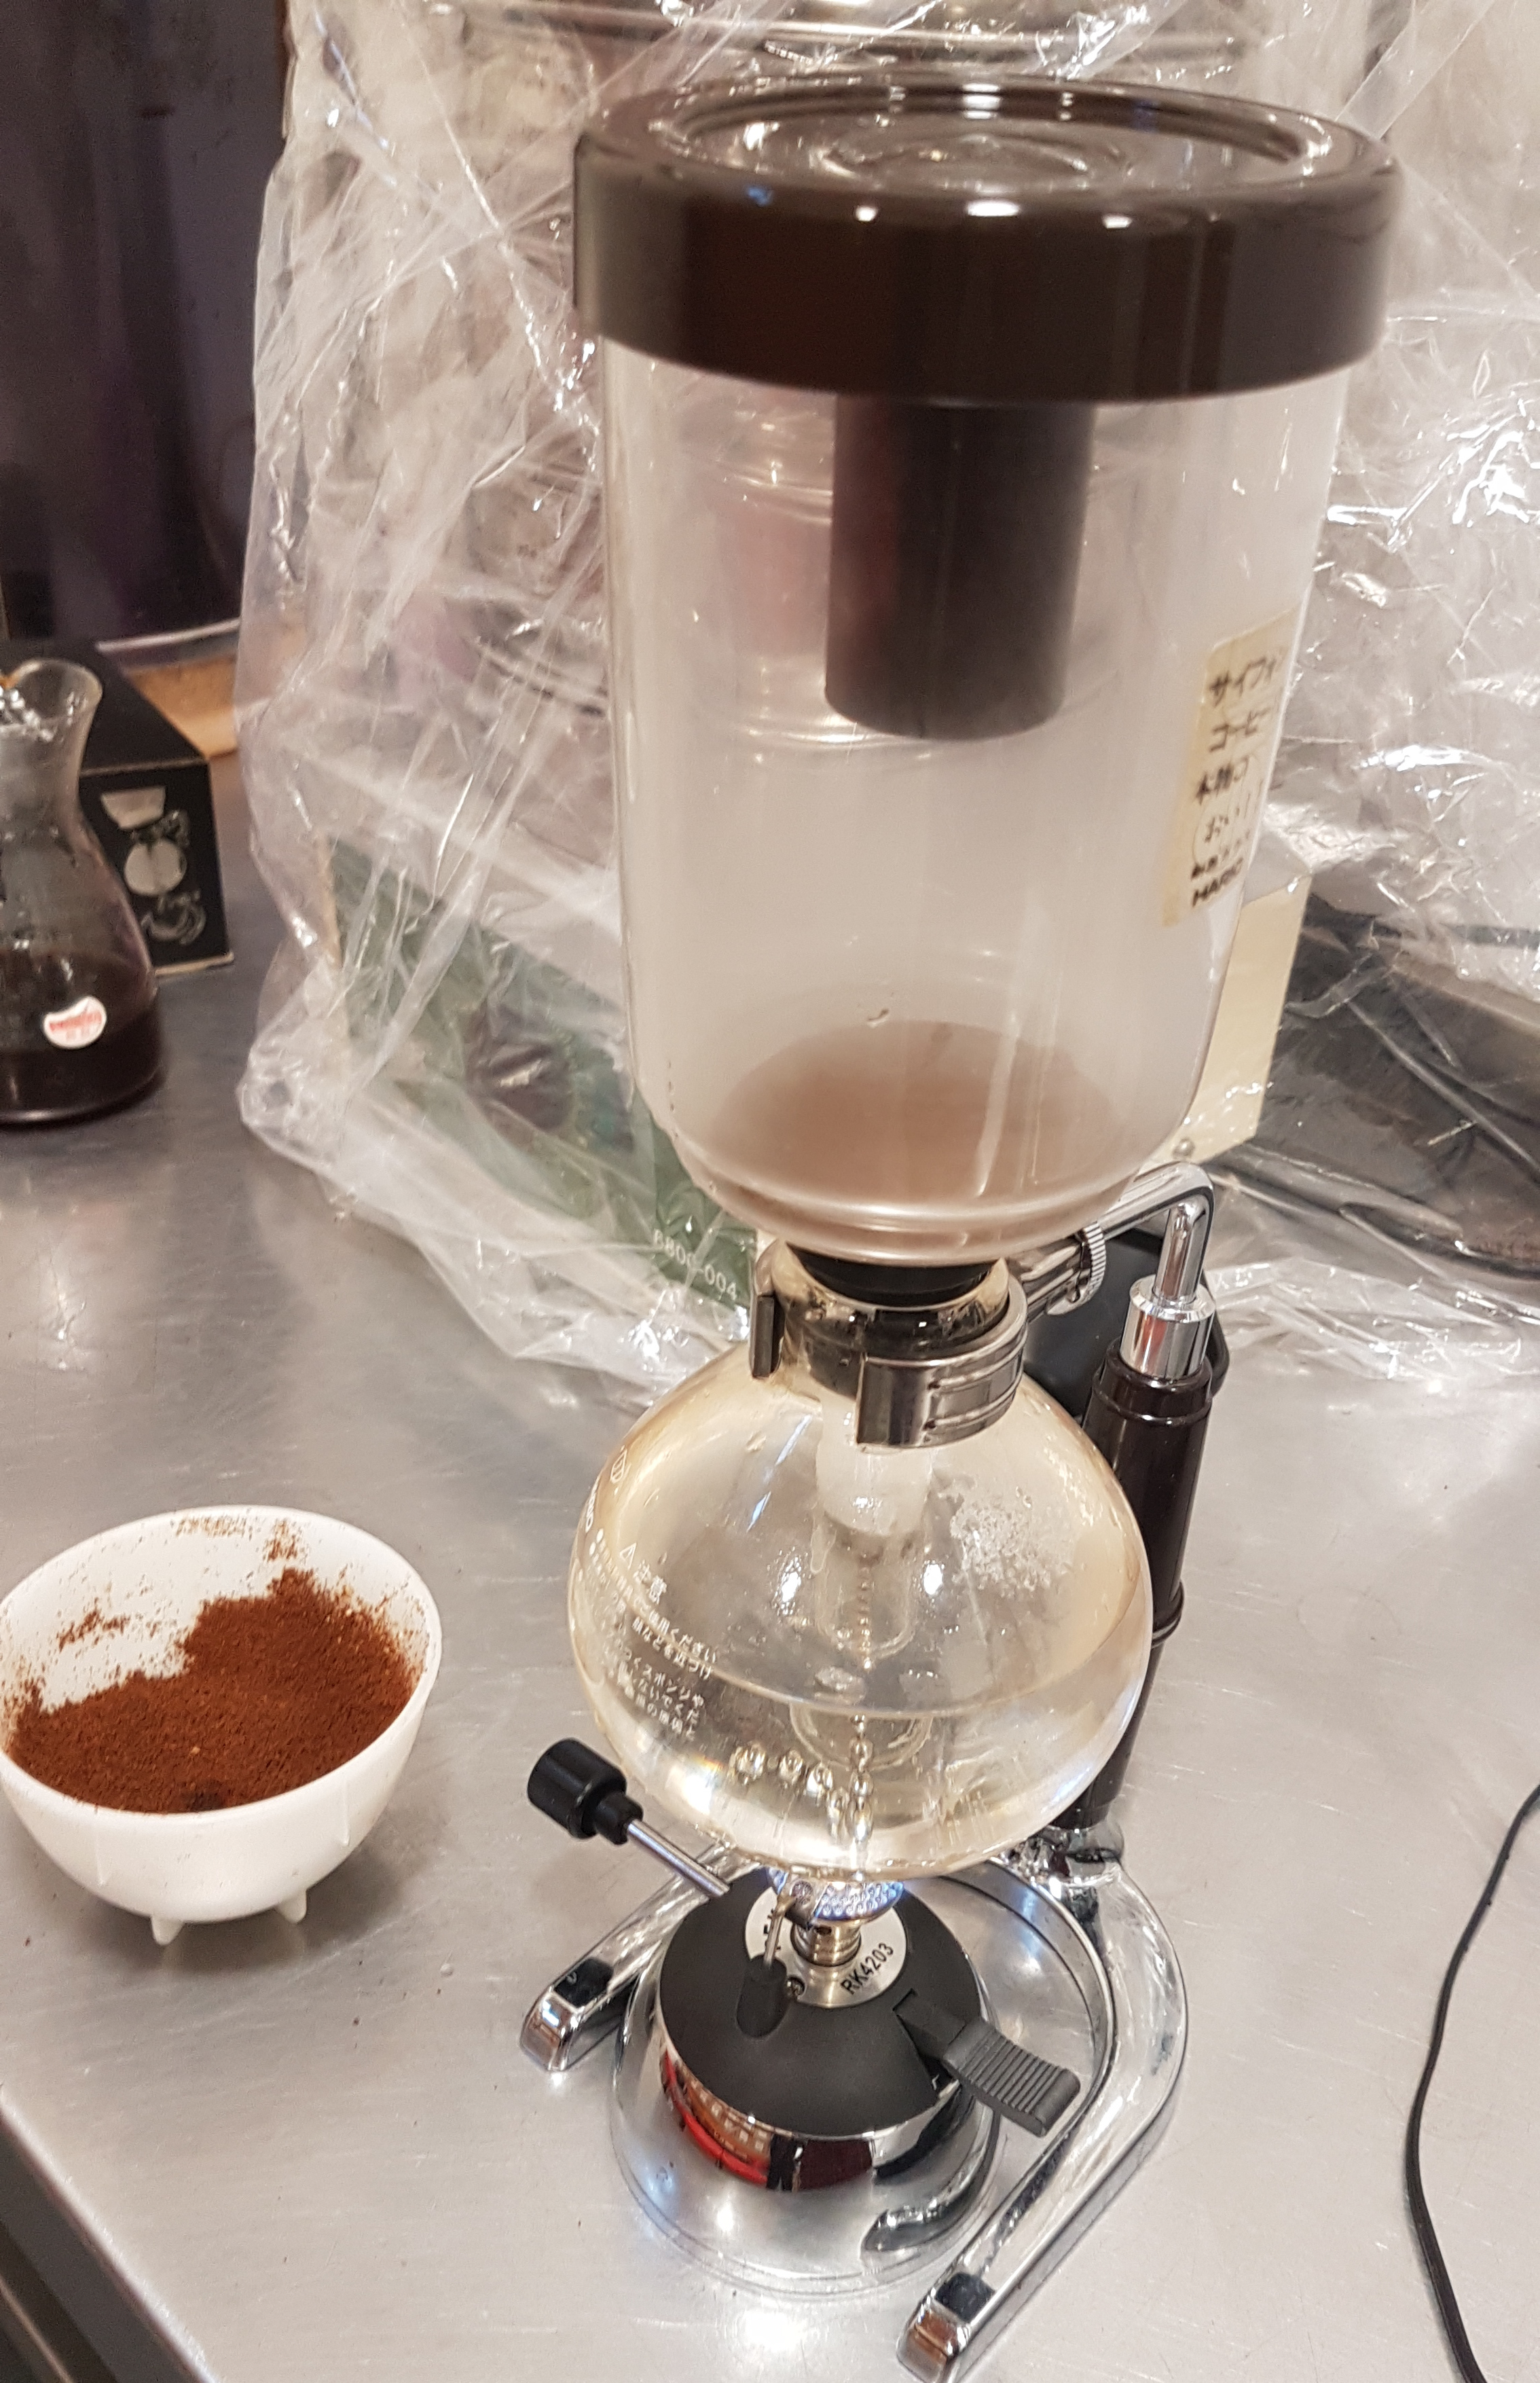 Siphon Coffee Maker